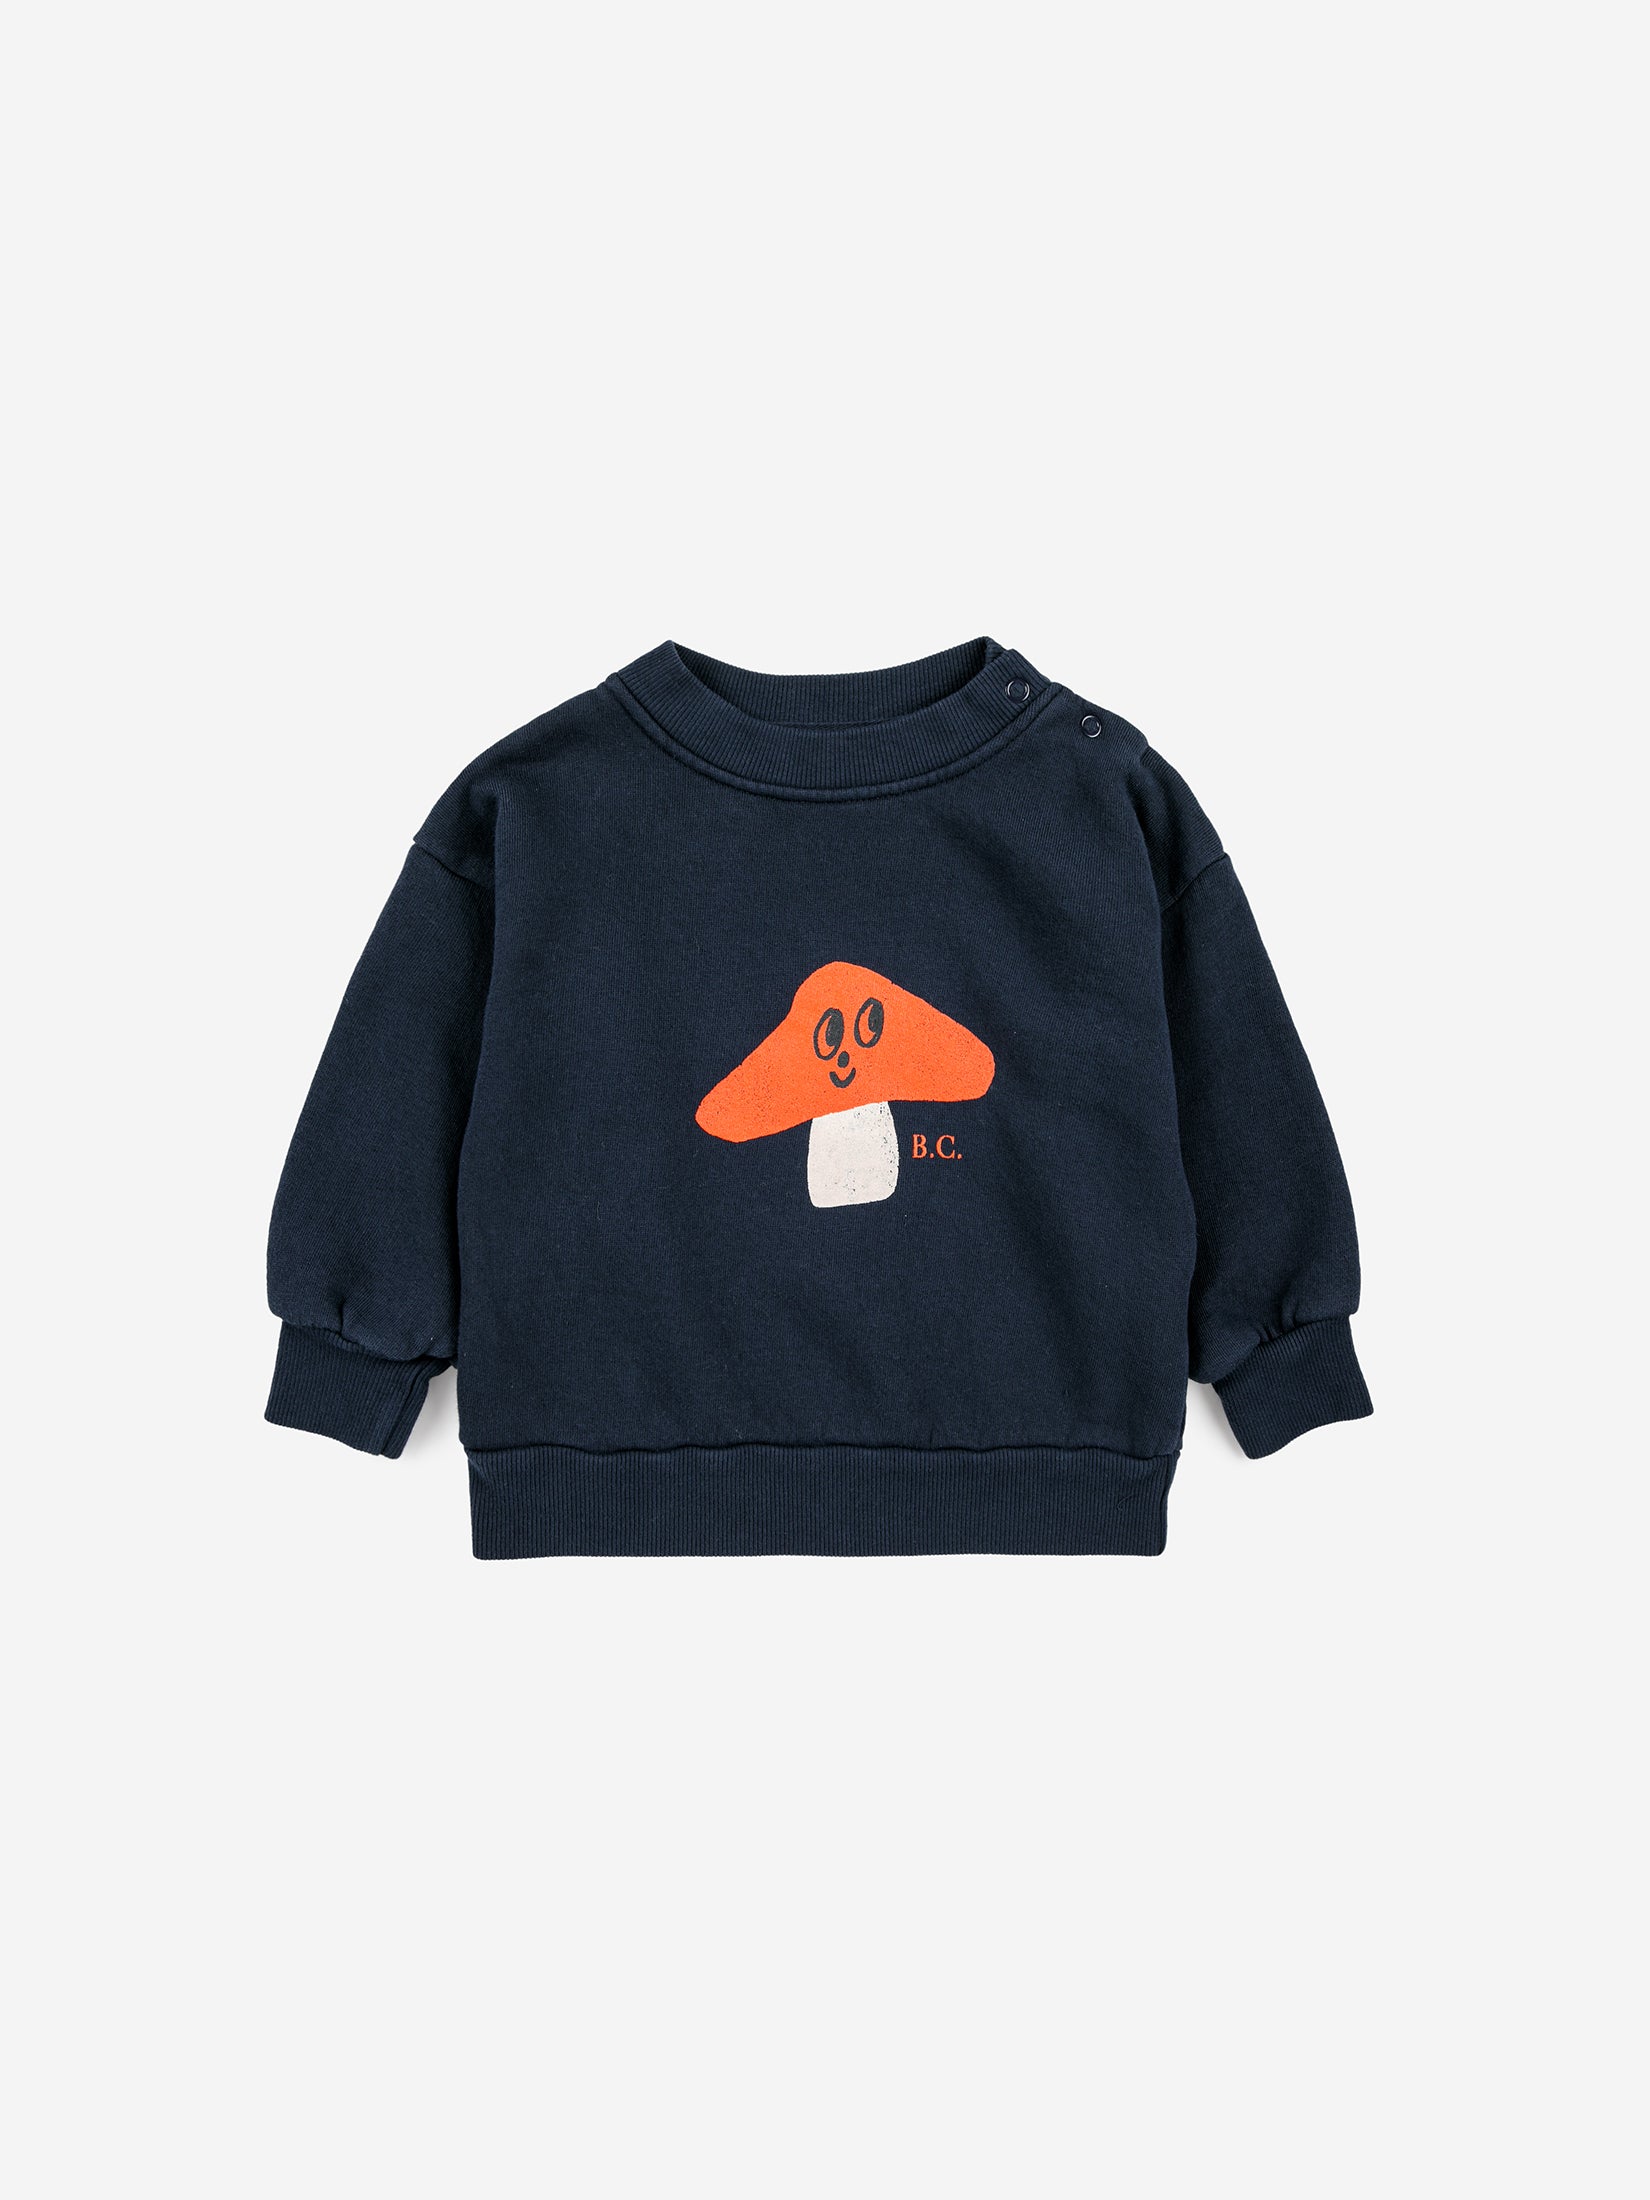 Mr. Mushroom sweatshirt - Baby